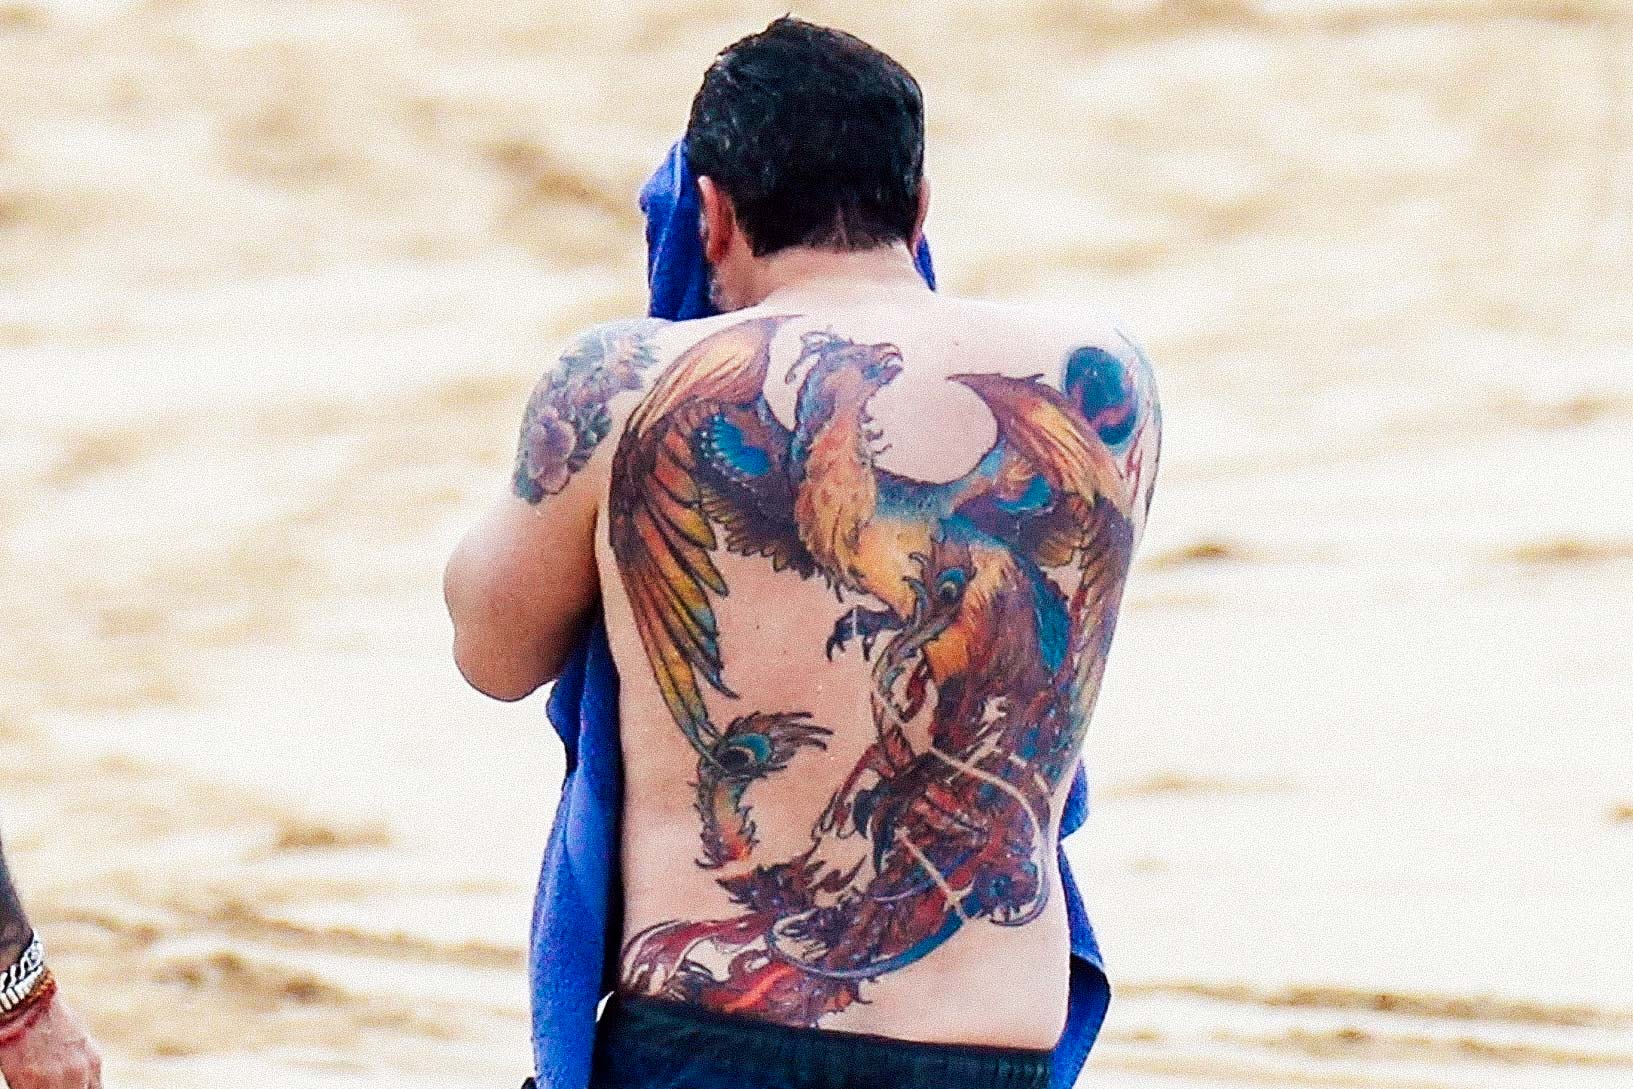 An interview with a tattoo artist about Ben Affleck's massive back tattoo.